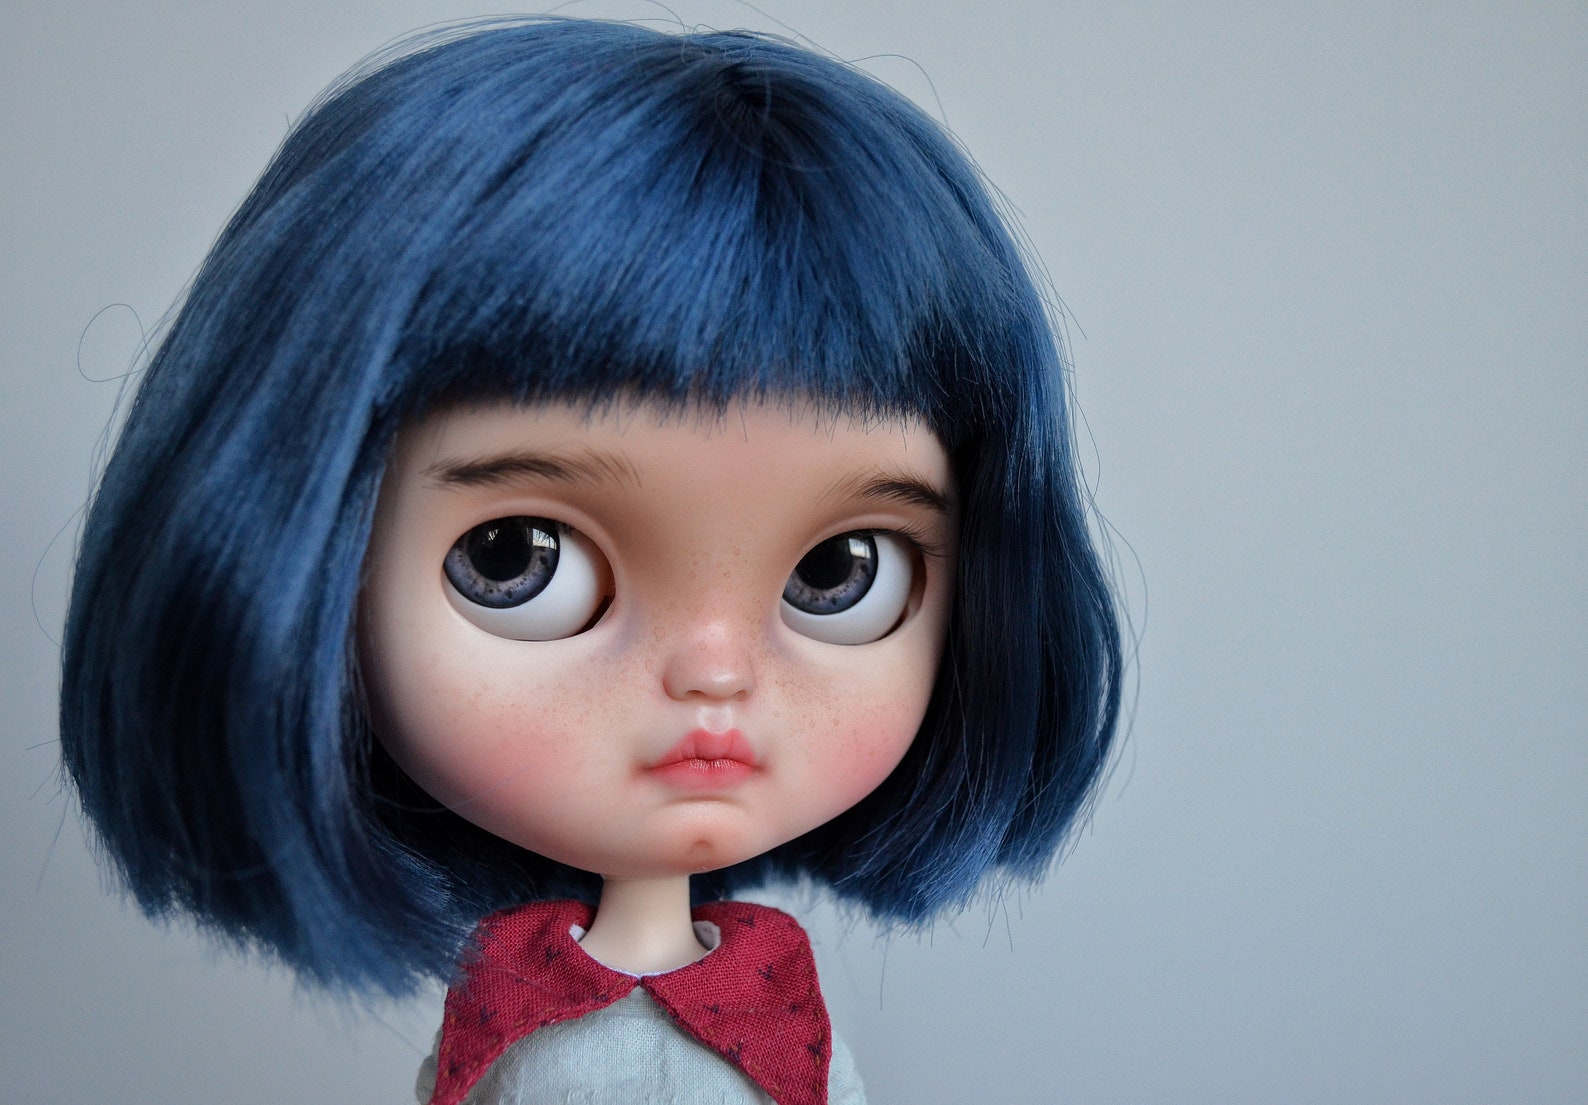 6. "Indigo" 18 inch doll with blue hair - wide 4